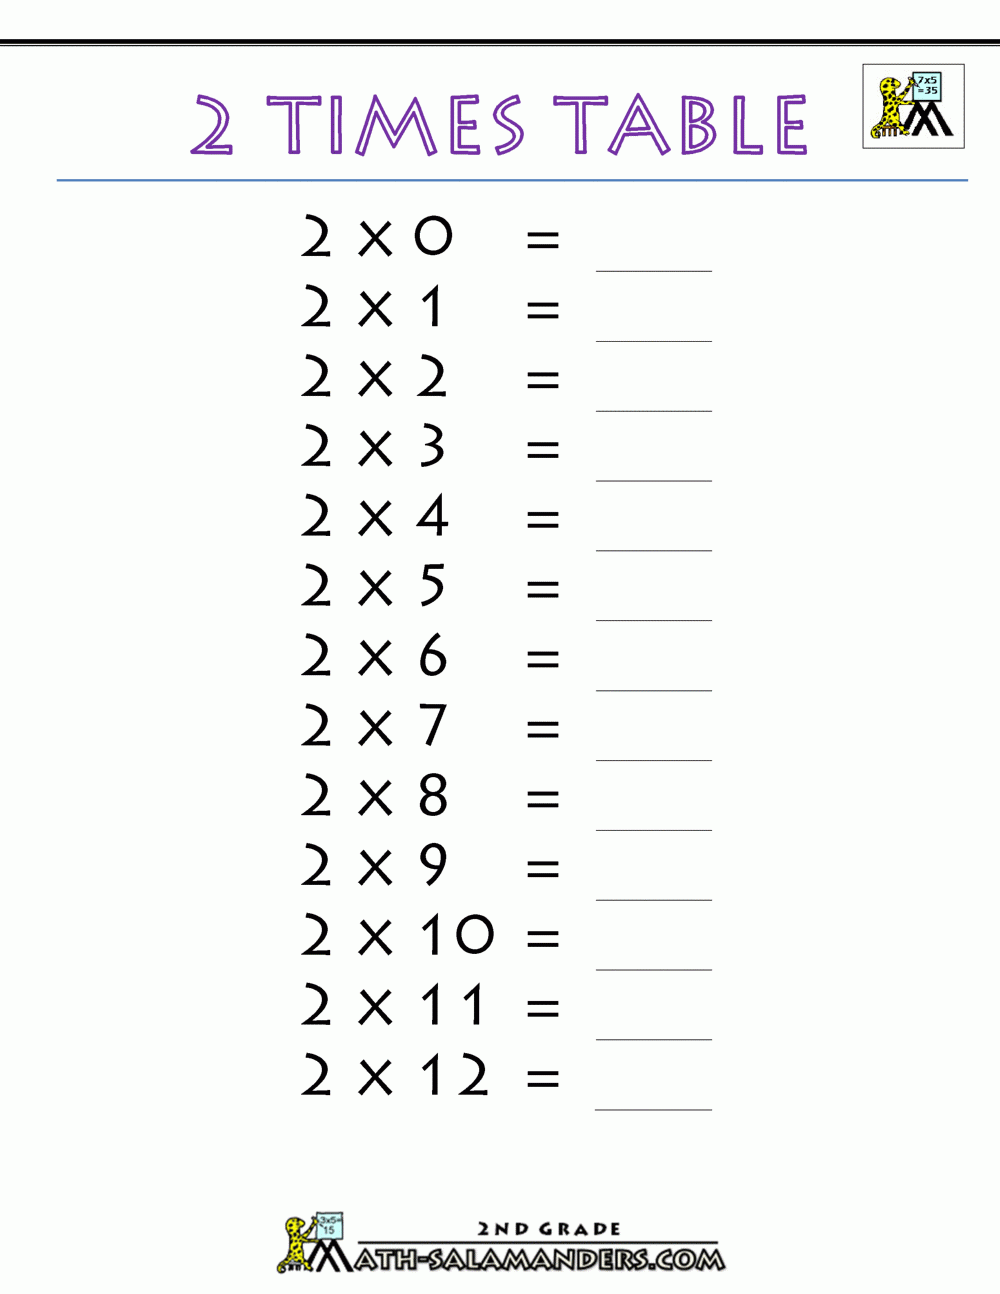 Multiplication Tables Practice Worksheets Pdf